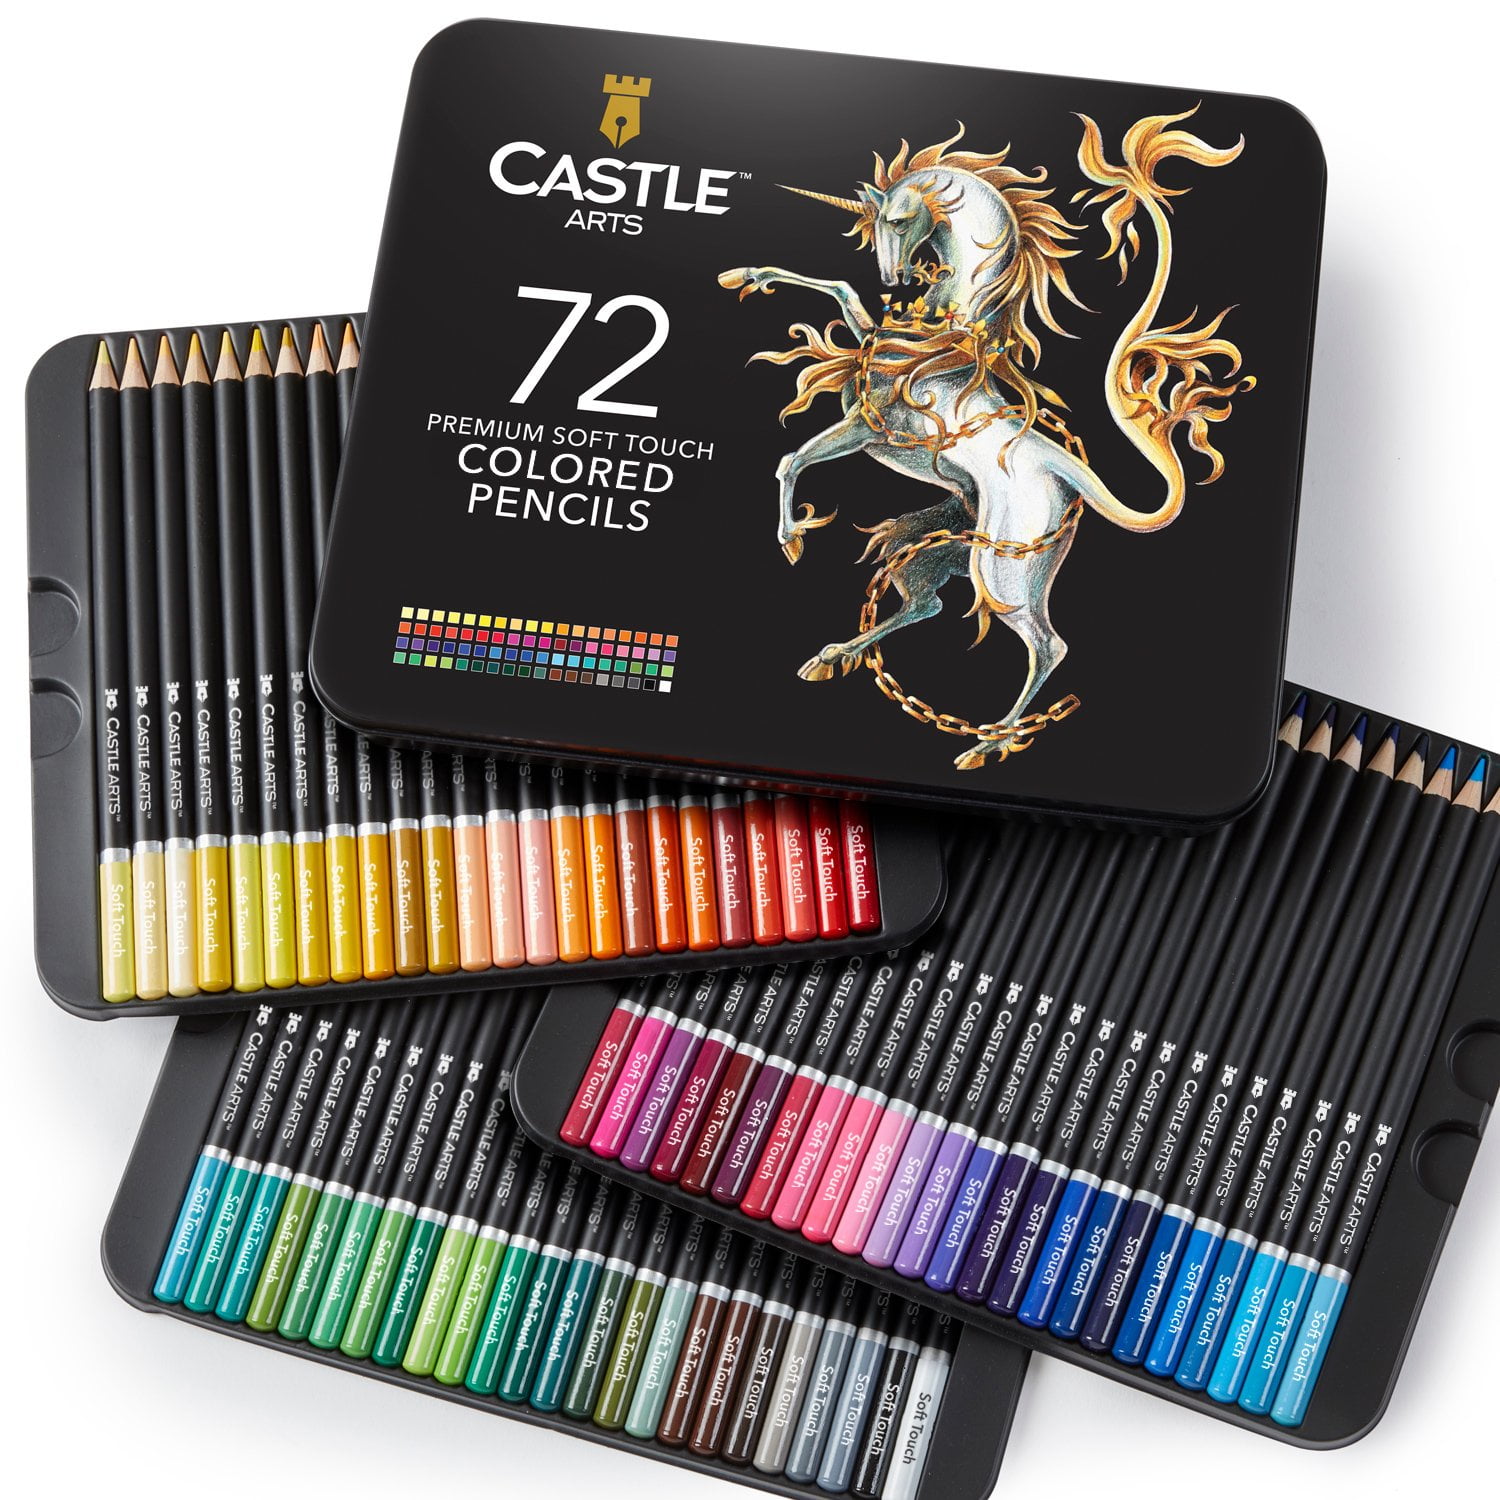 Castle Art Supplies 72 Piece Colored Coloring Pencils Set for Adults